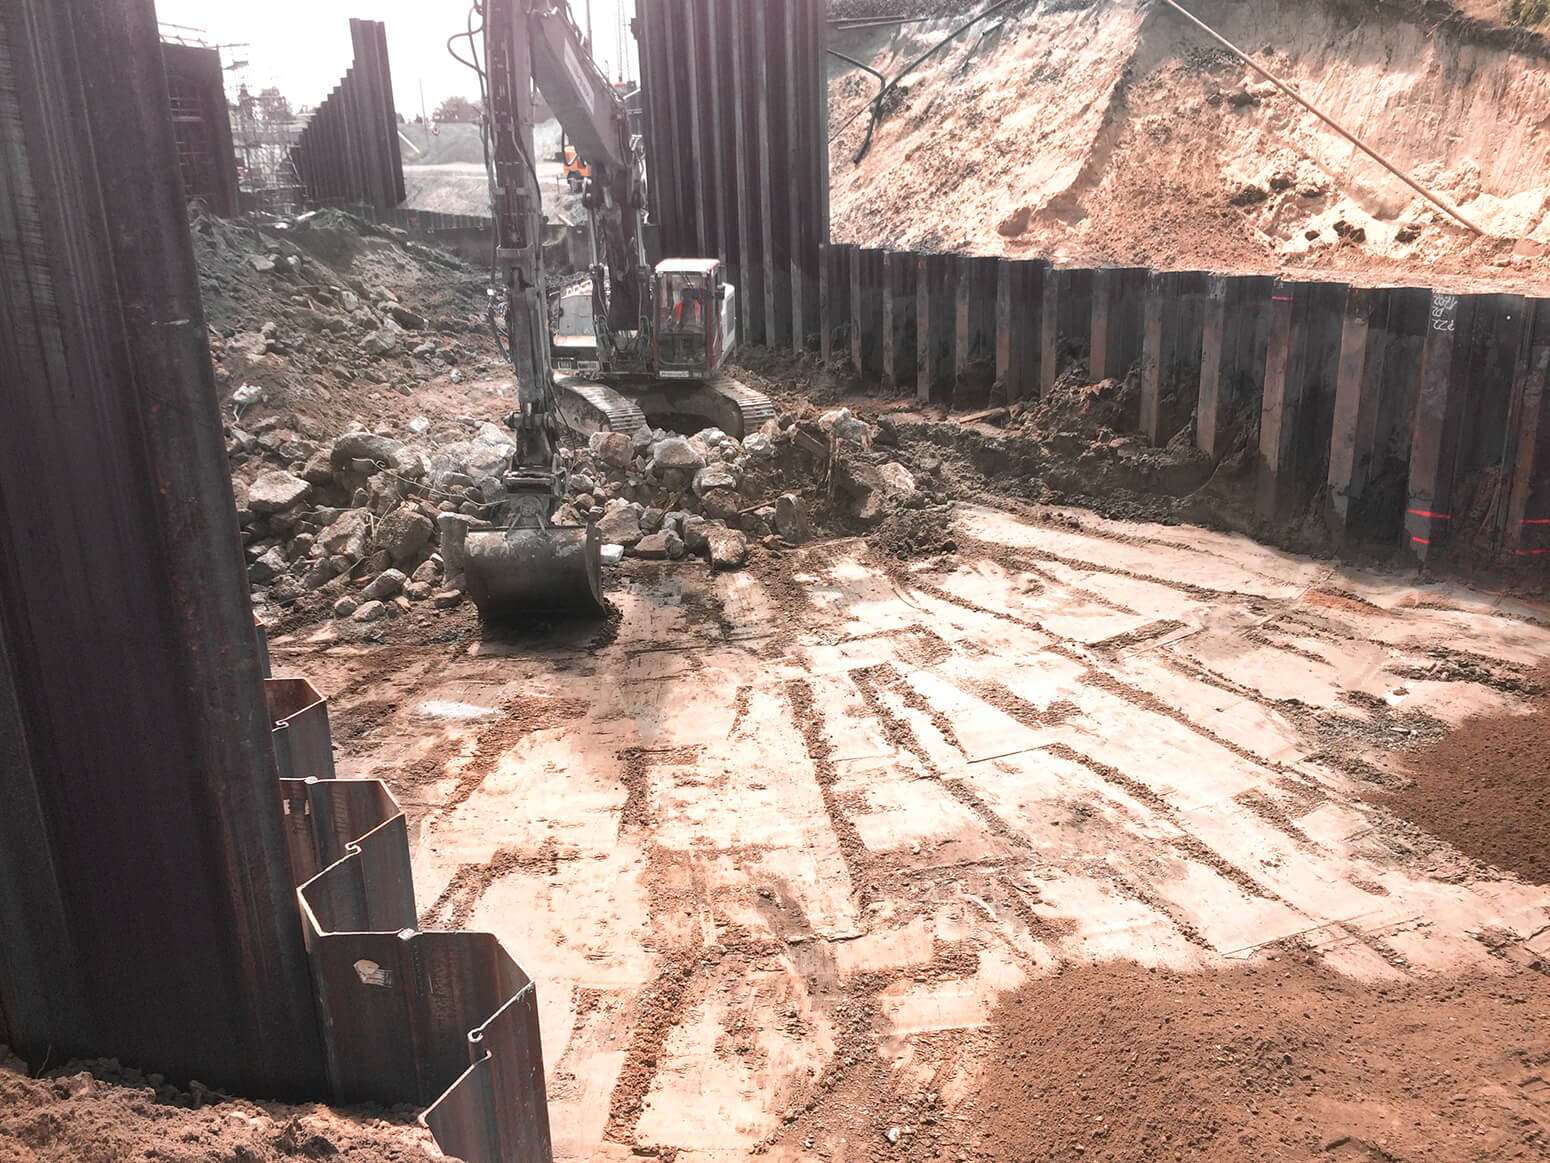 An excavator between sheet-pile walls removing an old railway embankment and bridges